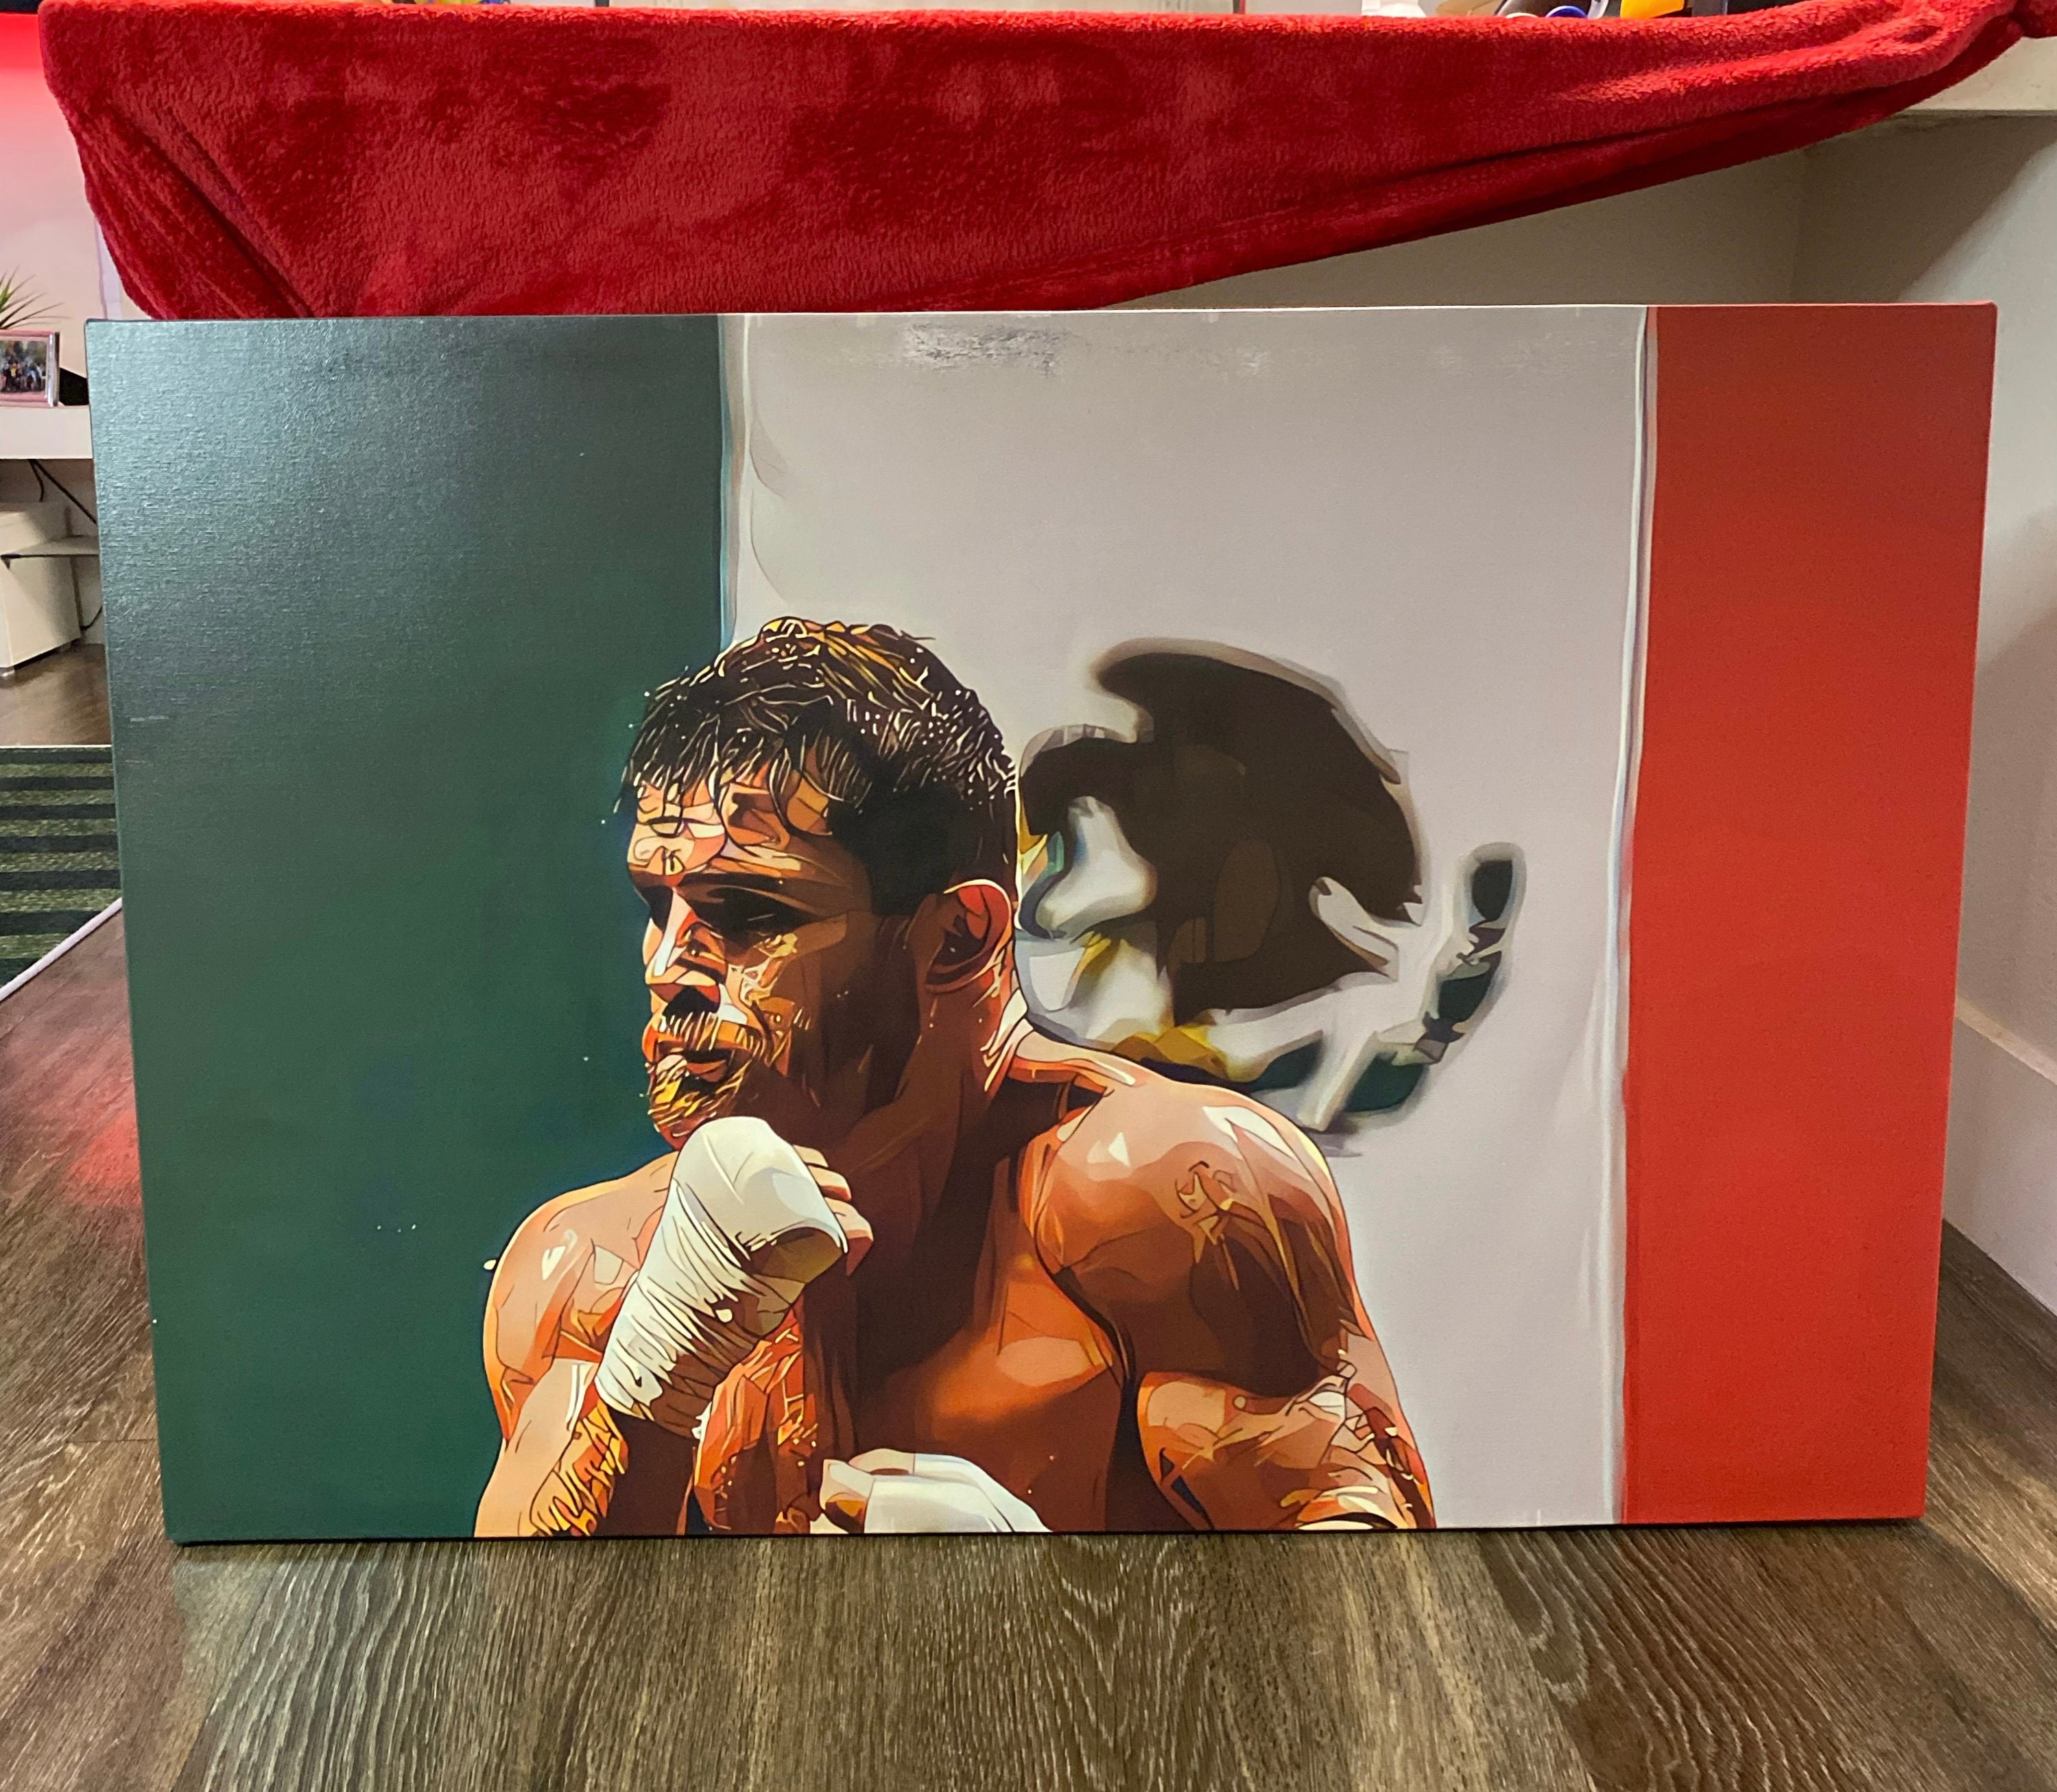  HYYNN Canelo Alvarez Vs GGG 1 Fight Boxing Poster